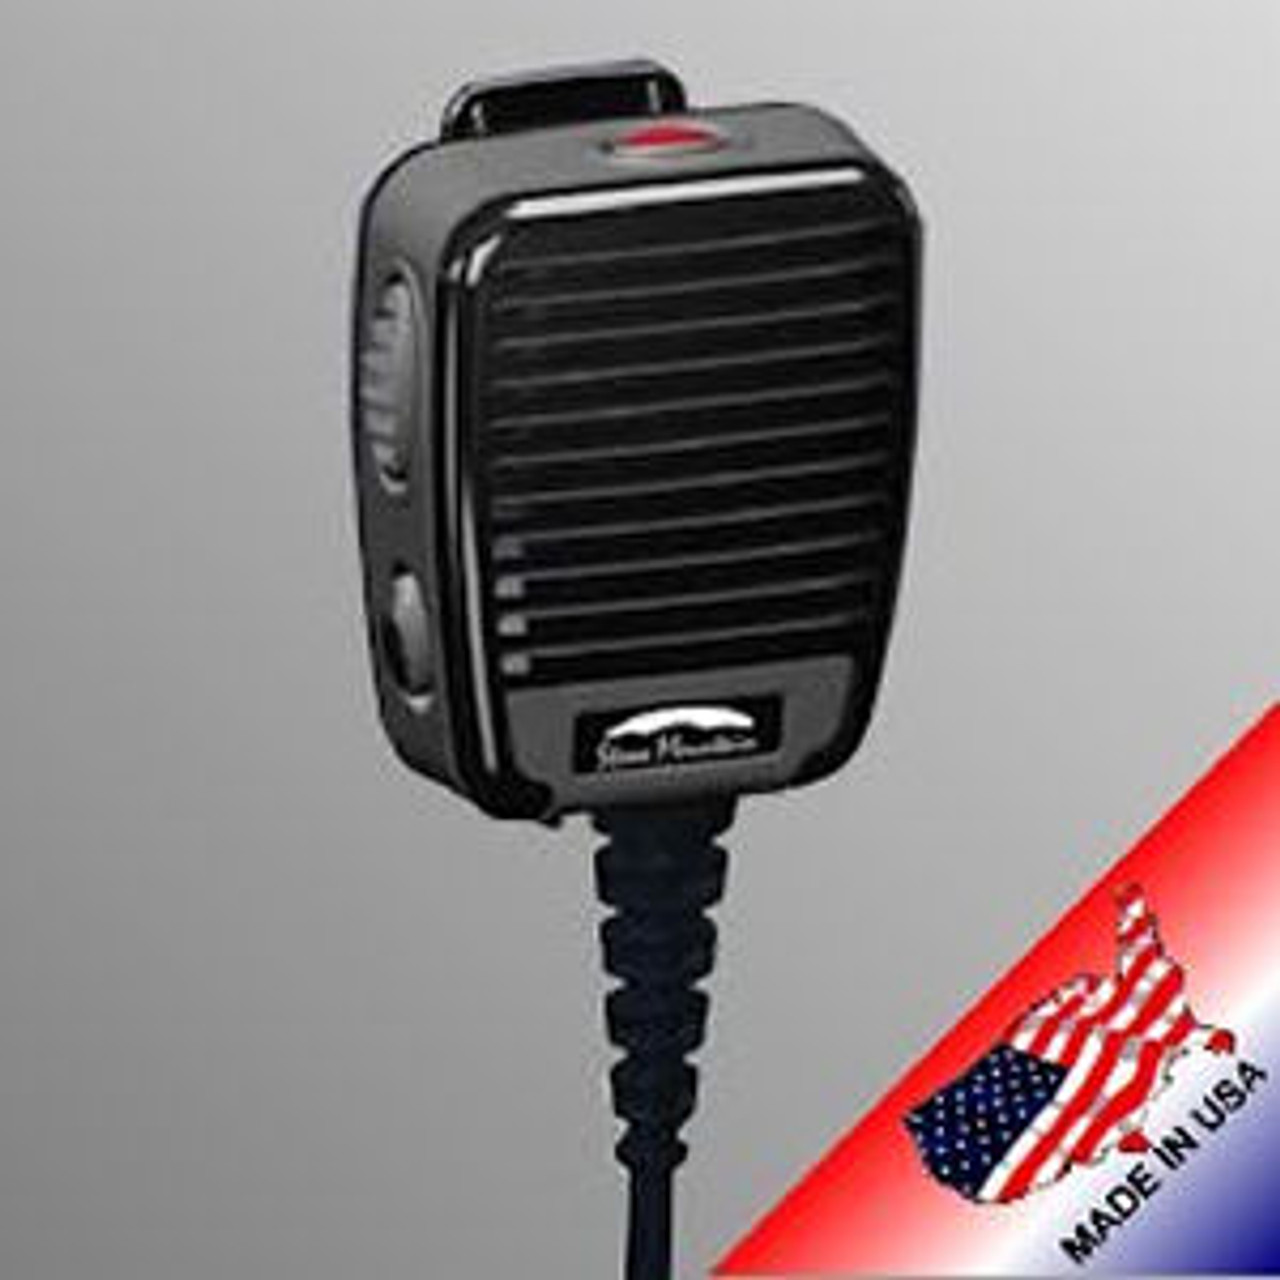 EF Johnson TK-5330 Noise Canceling Ruggedized Waterproof IP68 High Volume Speaker Mic